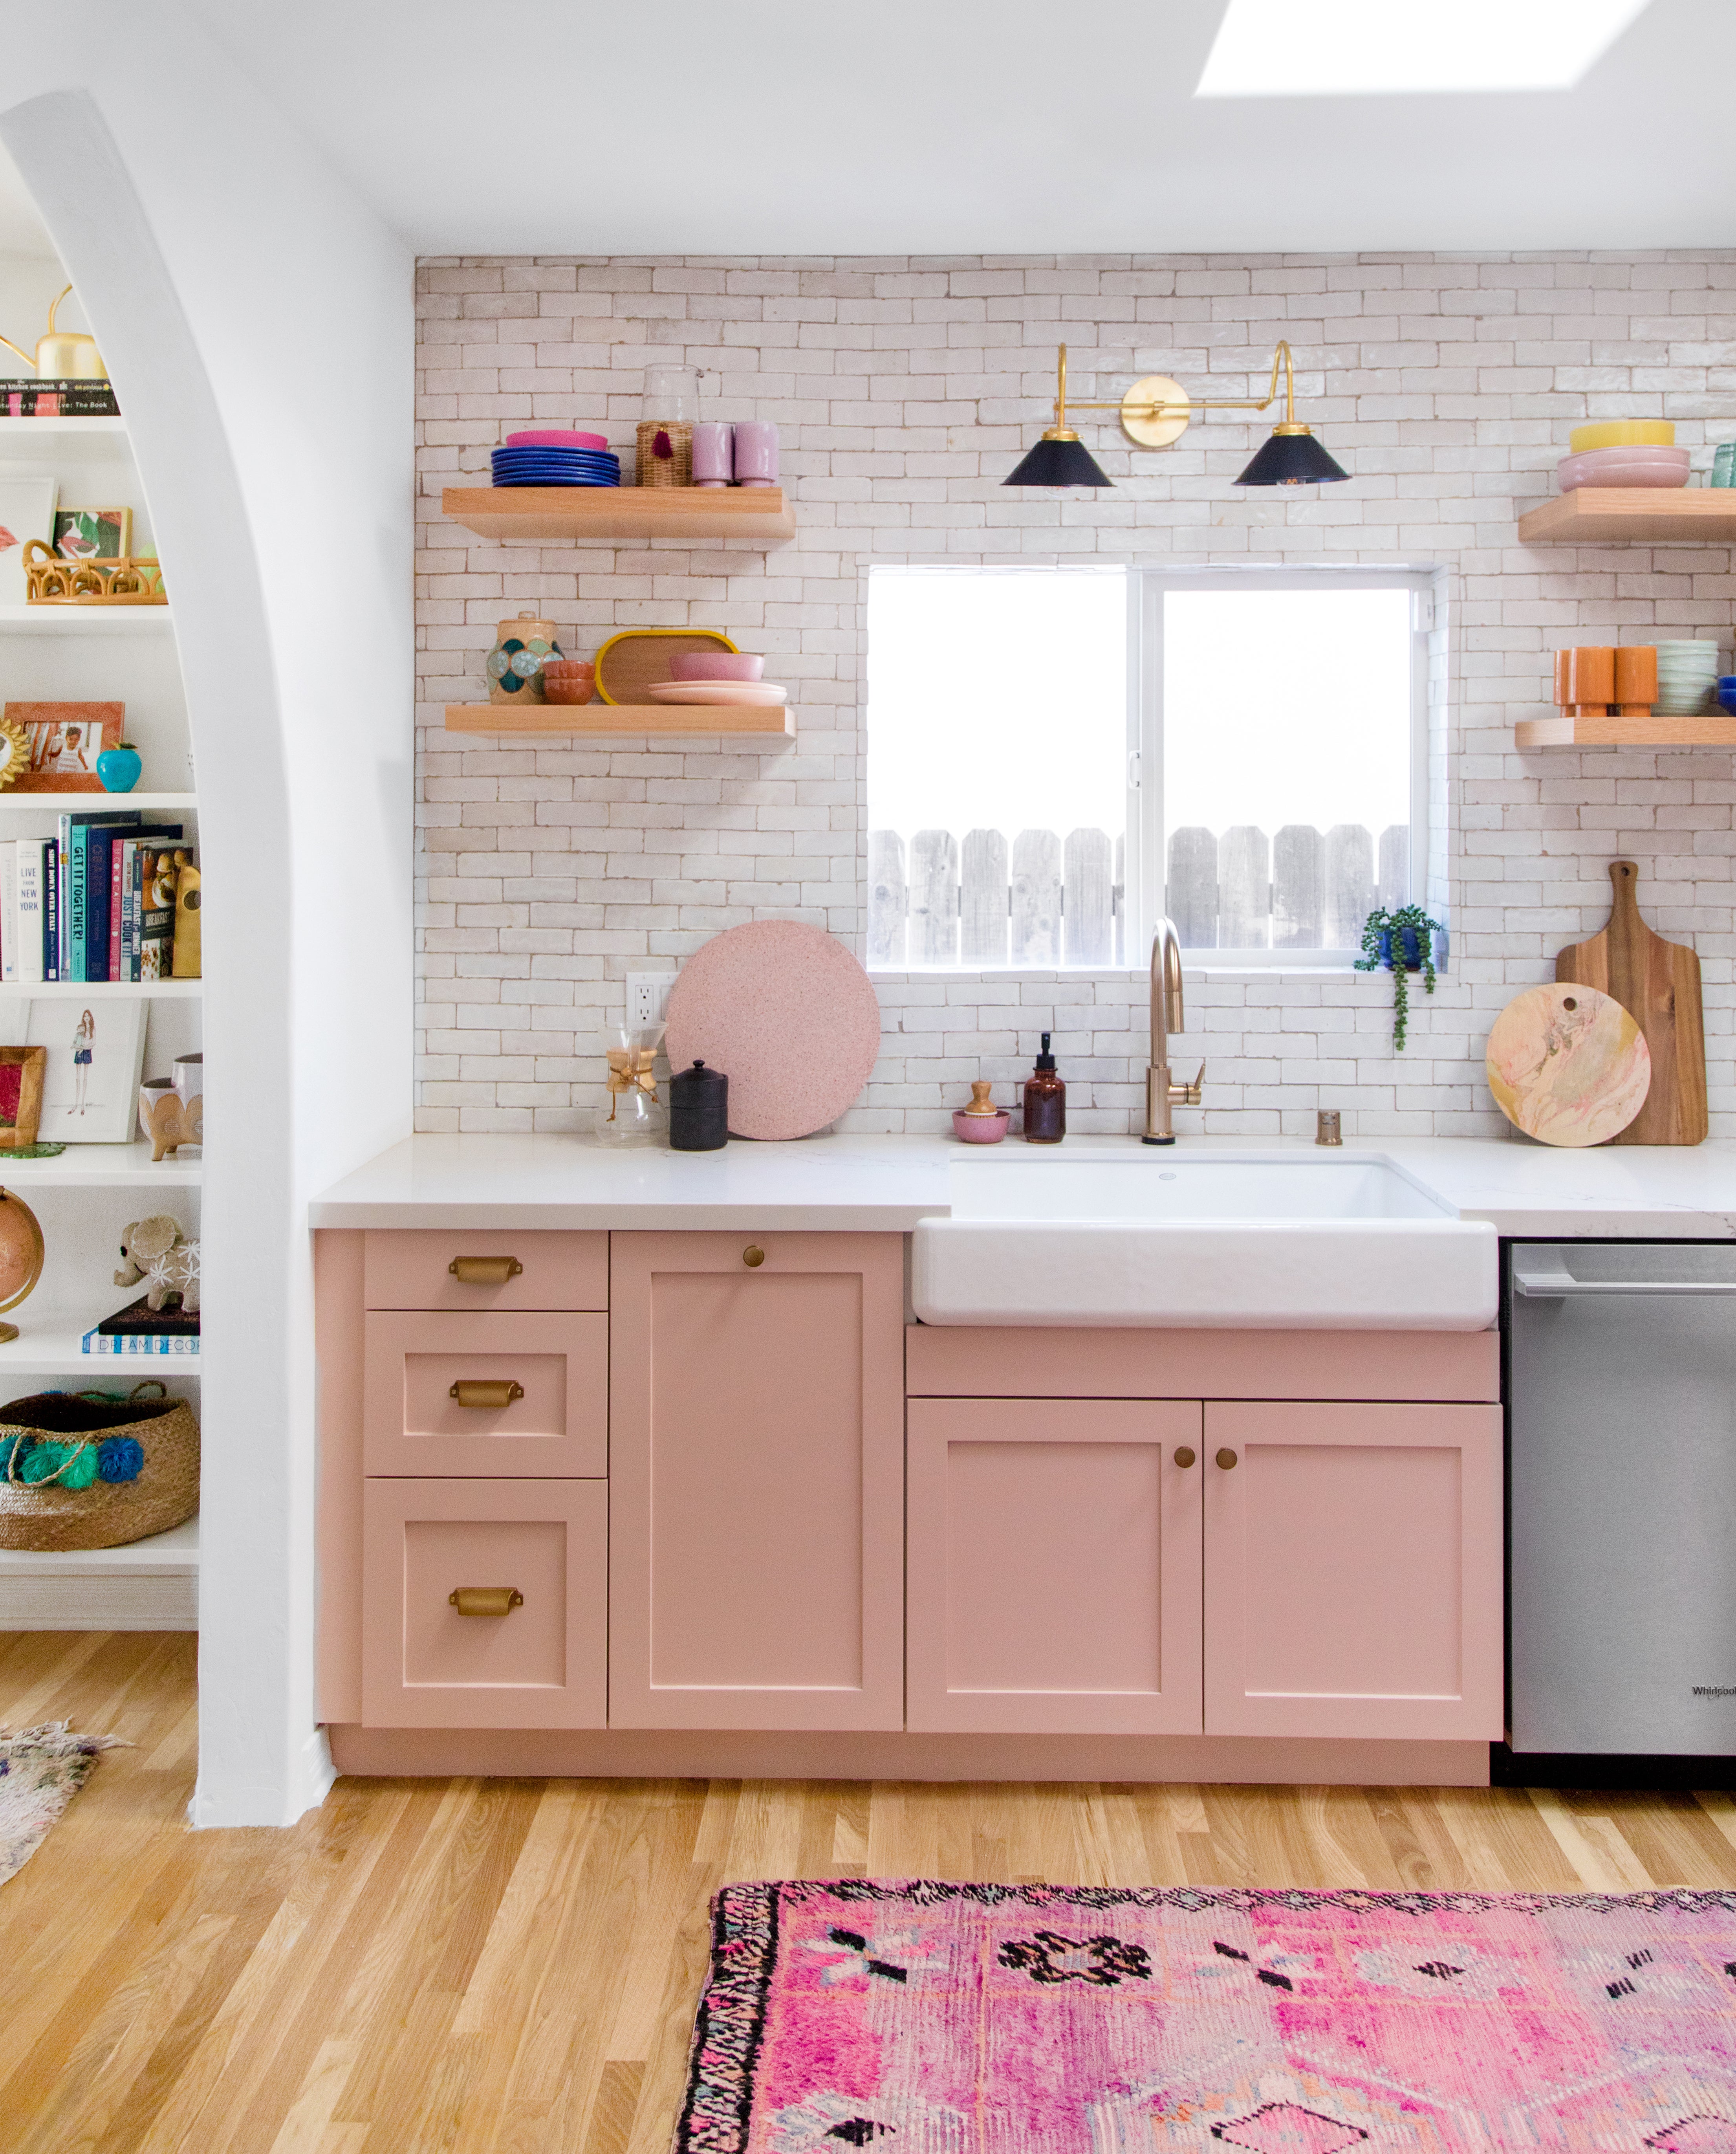 Studio DIY's Pink Kitchen Transformation Seriously Wows